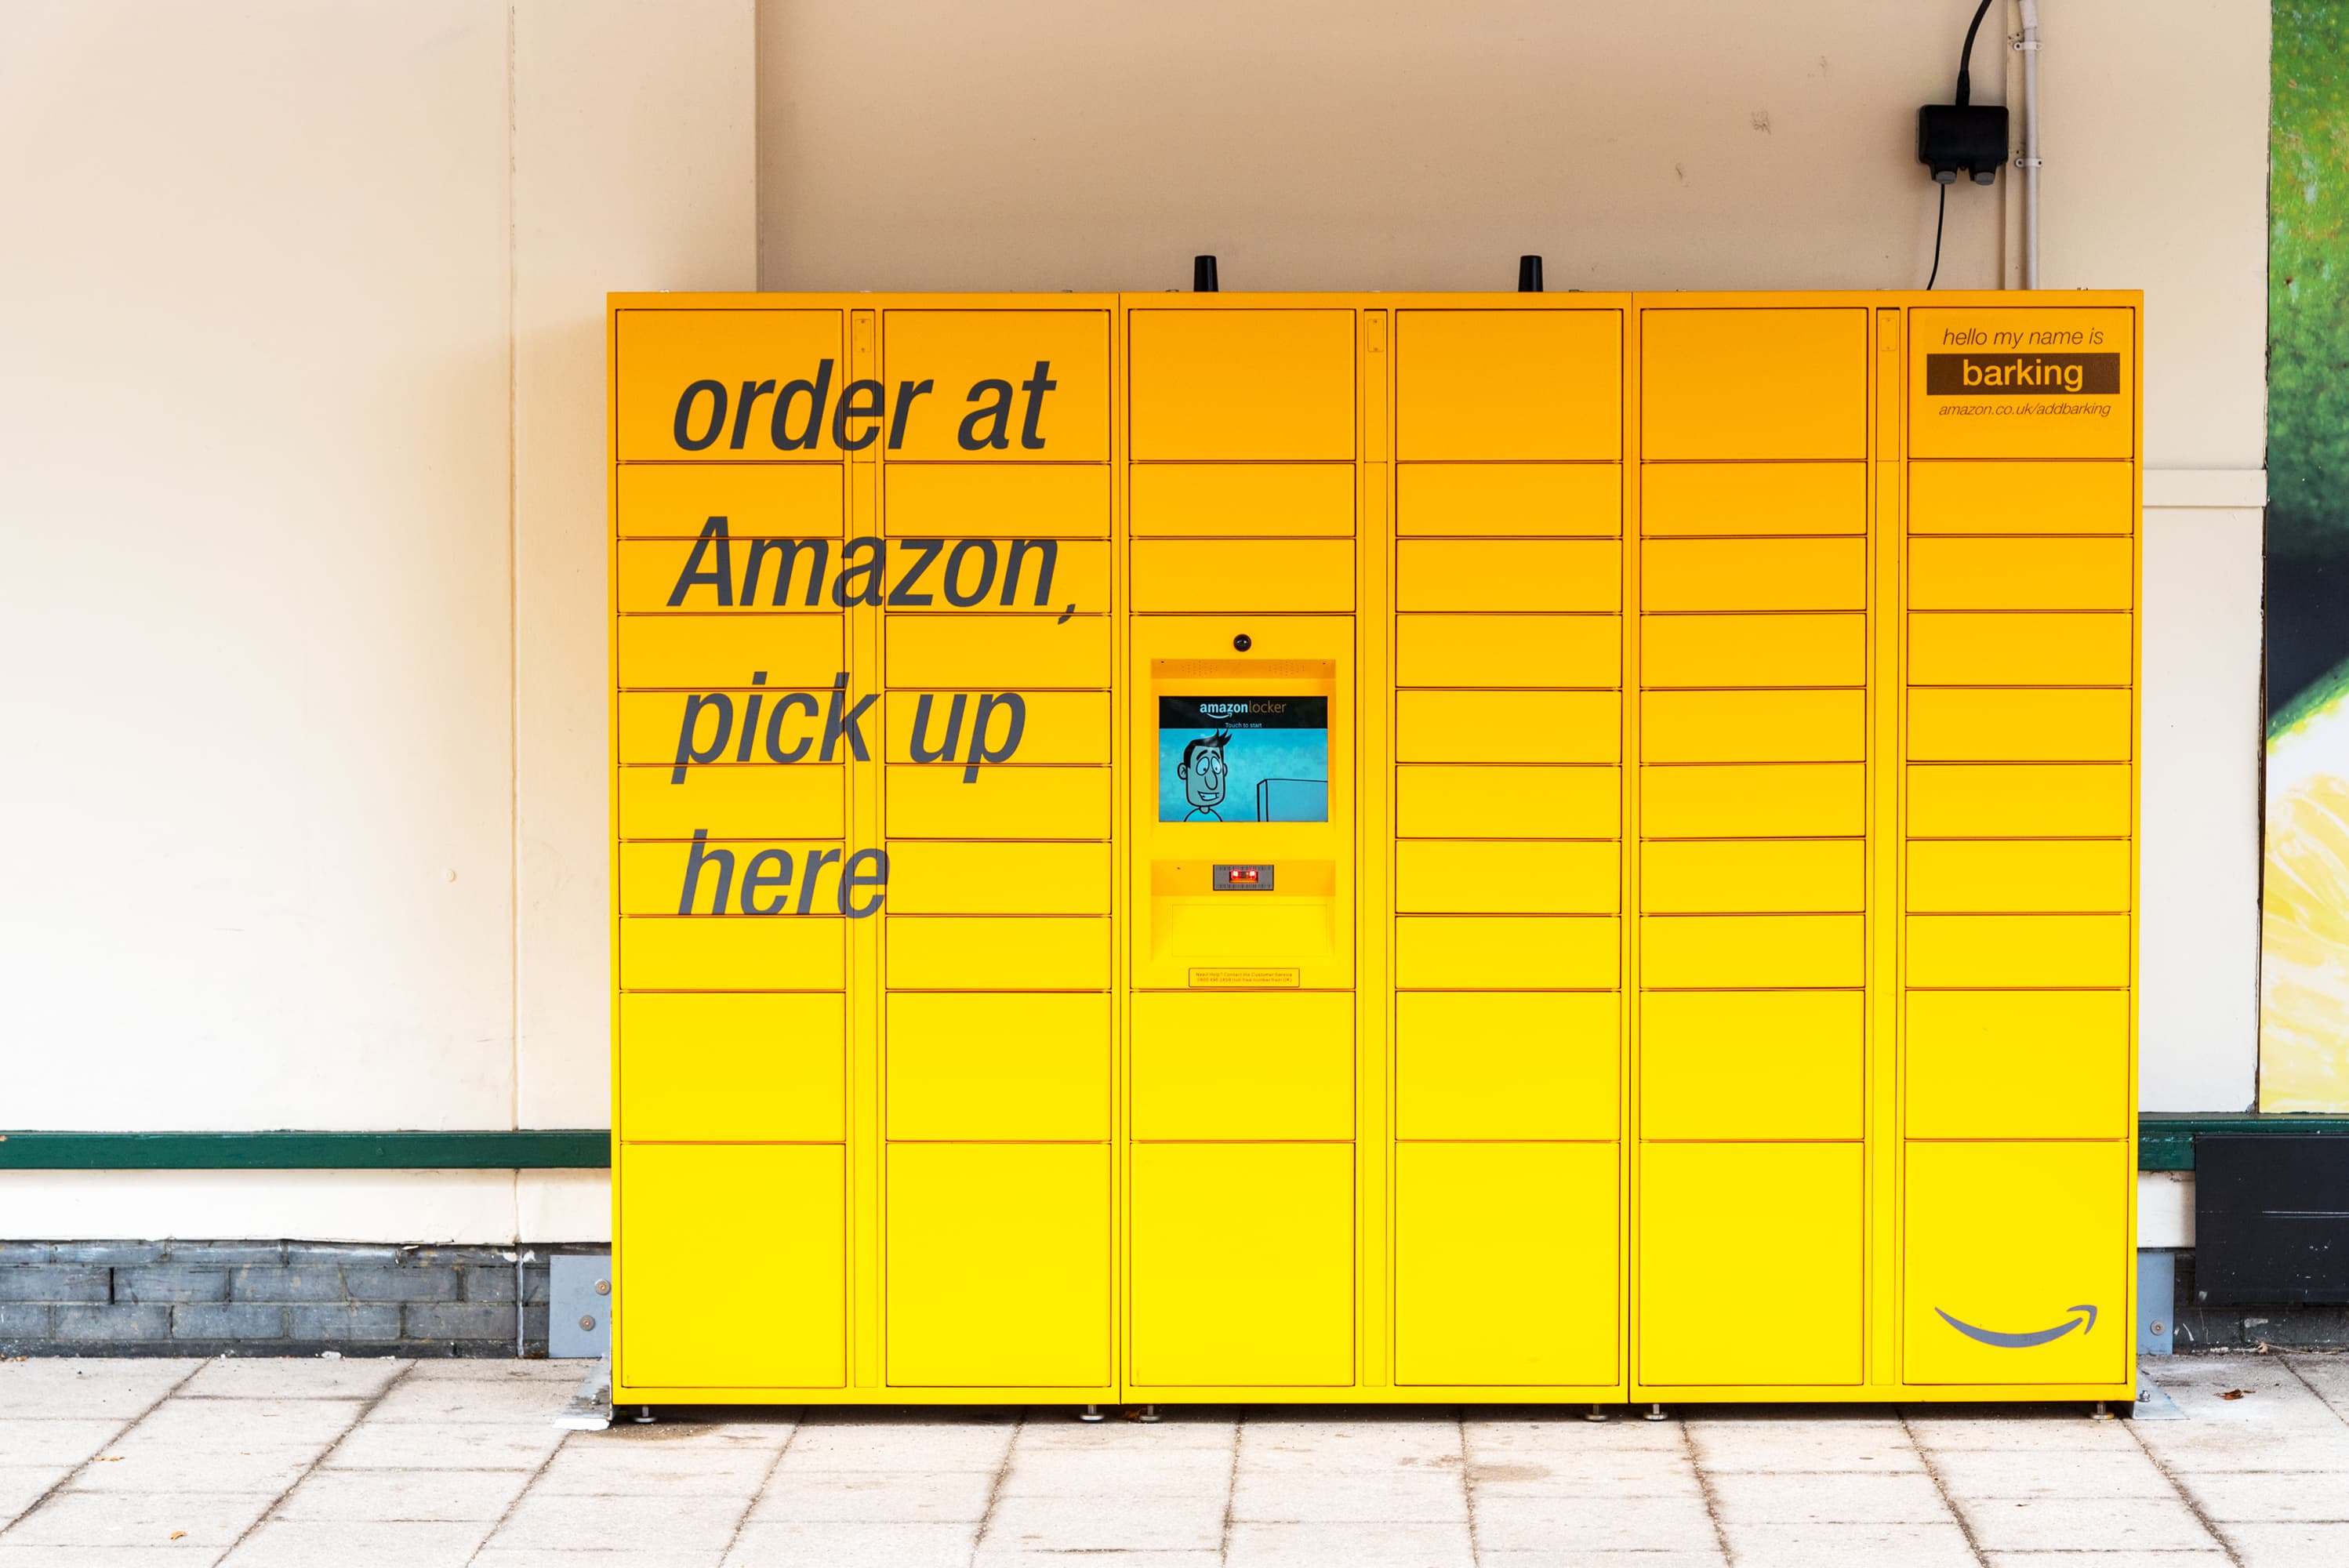 Amazon edition. Amazon pick up Locker. Automated pick-up Locker. Picking Amazon. Amazon Drop Box.